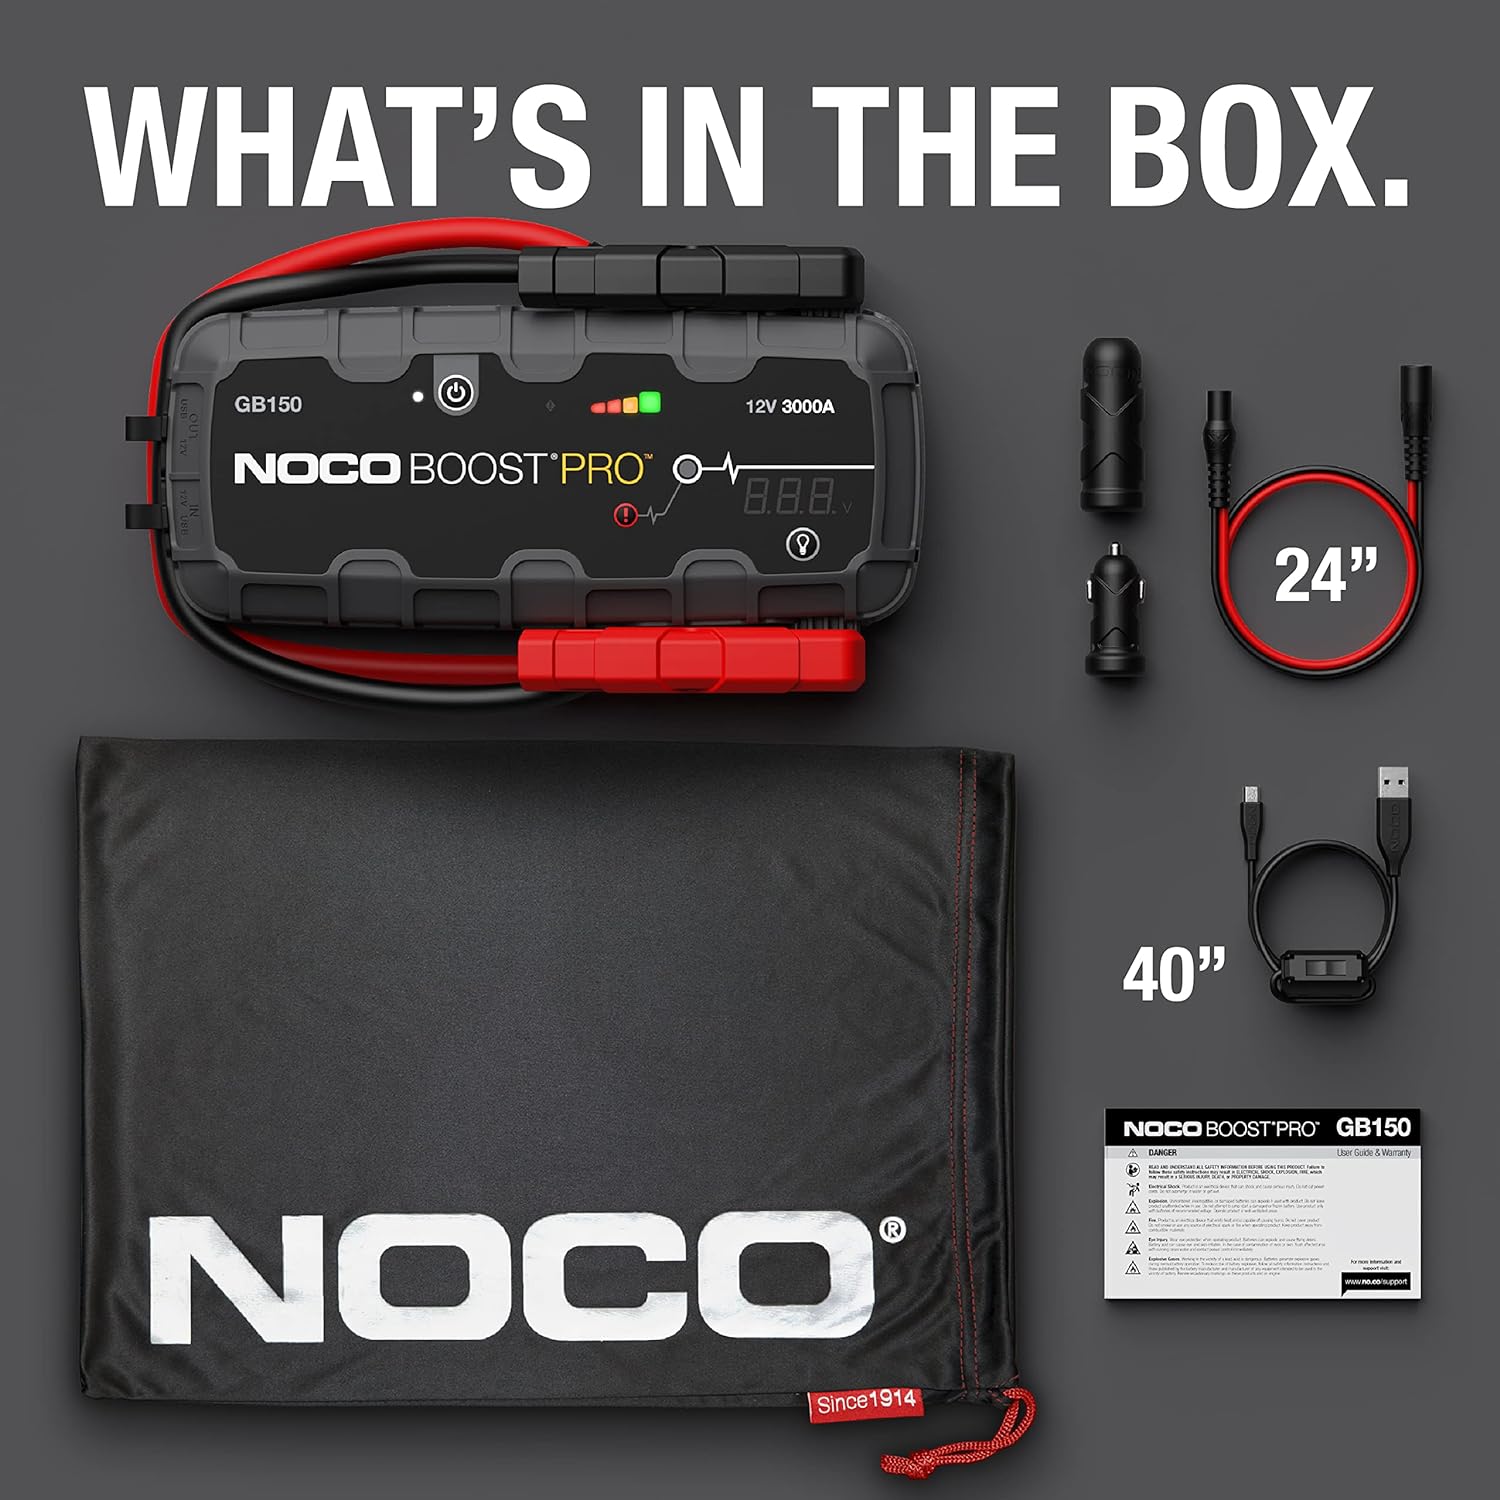 NOCO Boost Pro 3000A 12V UltraSafe Portable Lithium Jump Starter